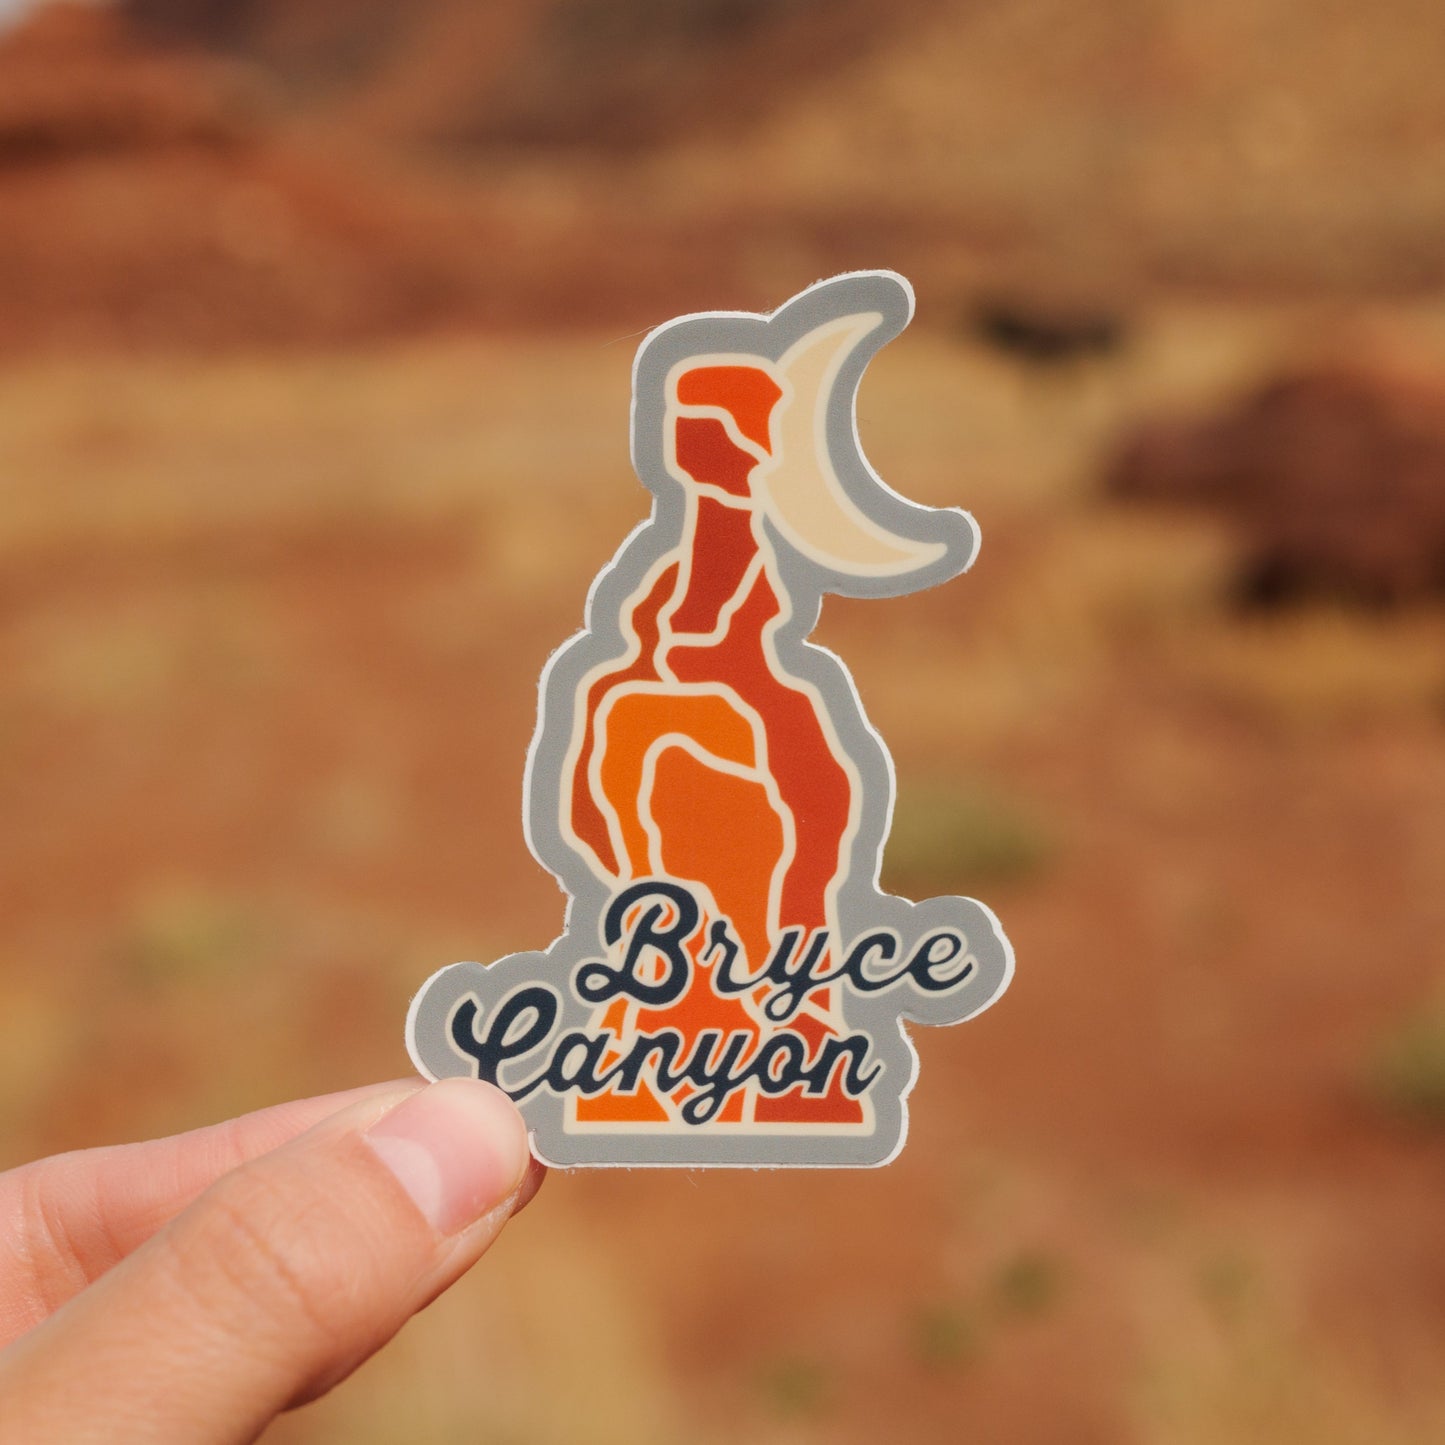 Bryce Canyon Thor's Hammer | Sticker